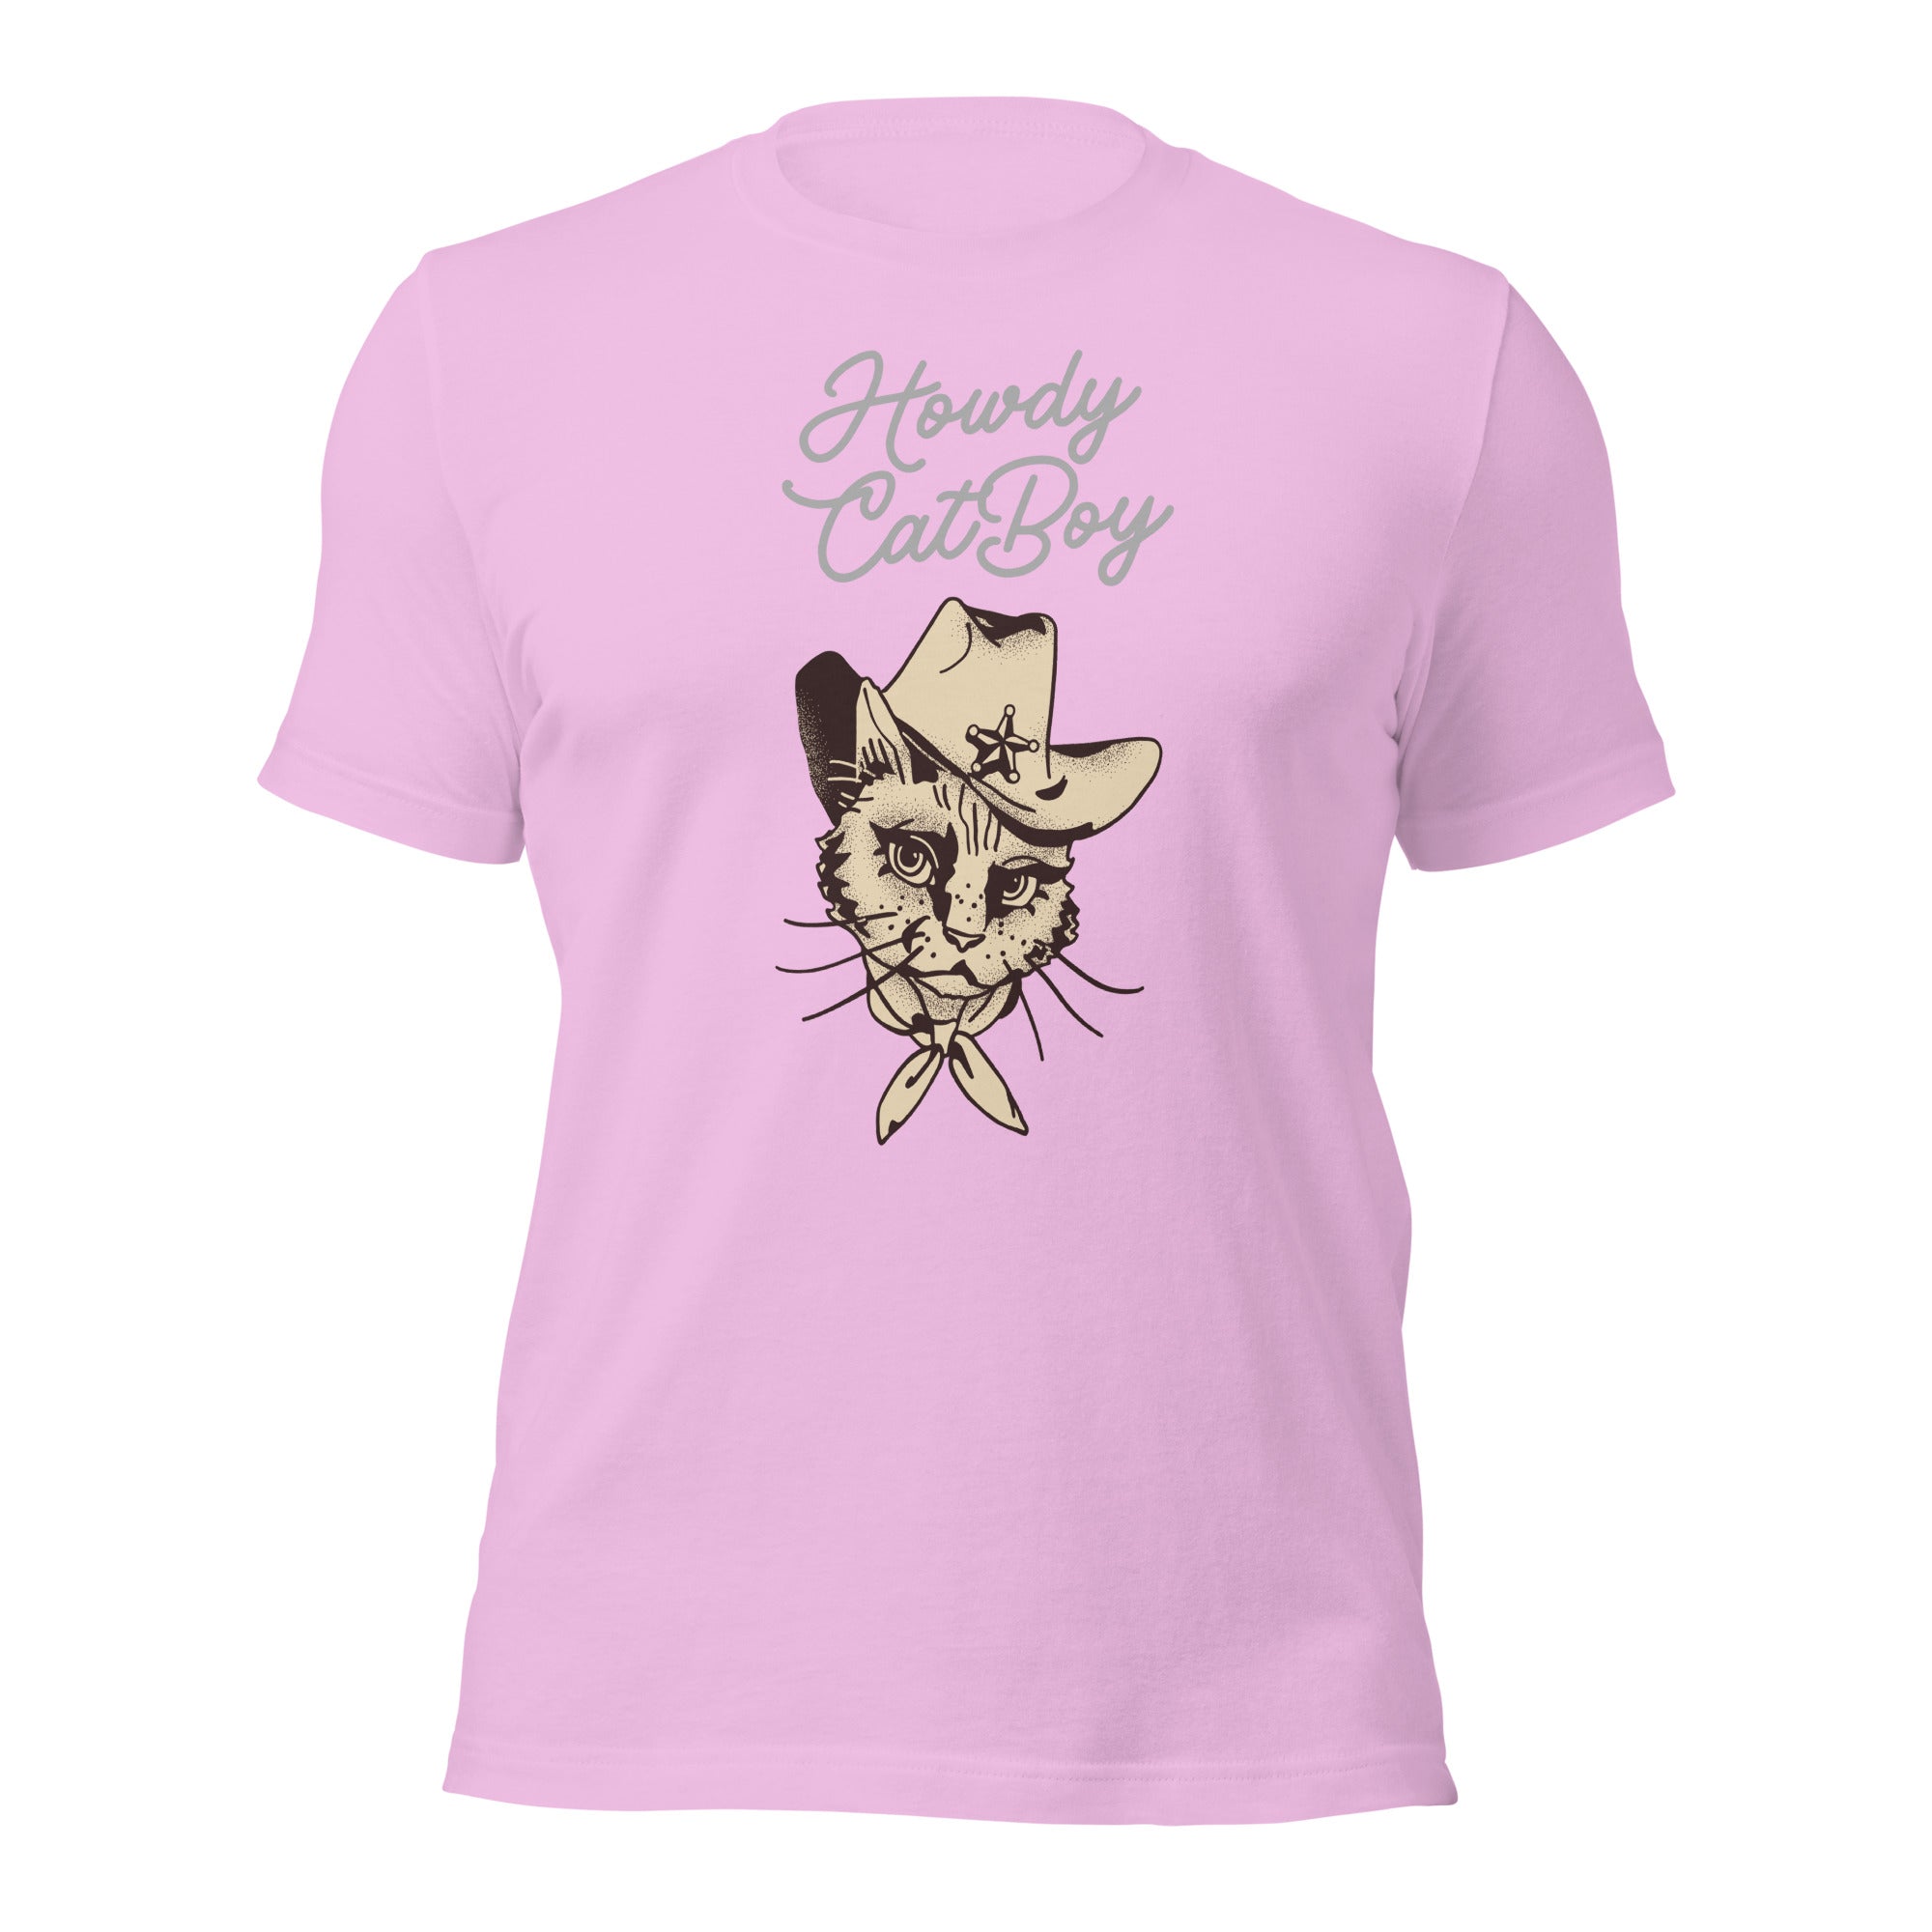 Howdy CatBoy - Unisex t-shirt